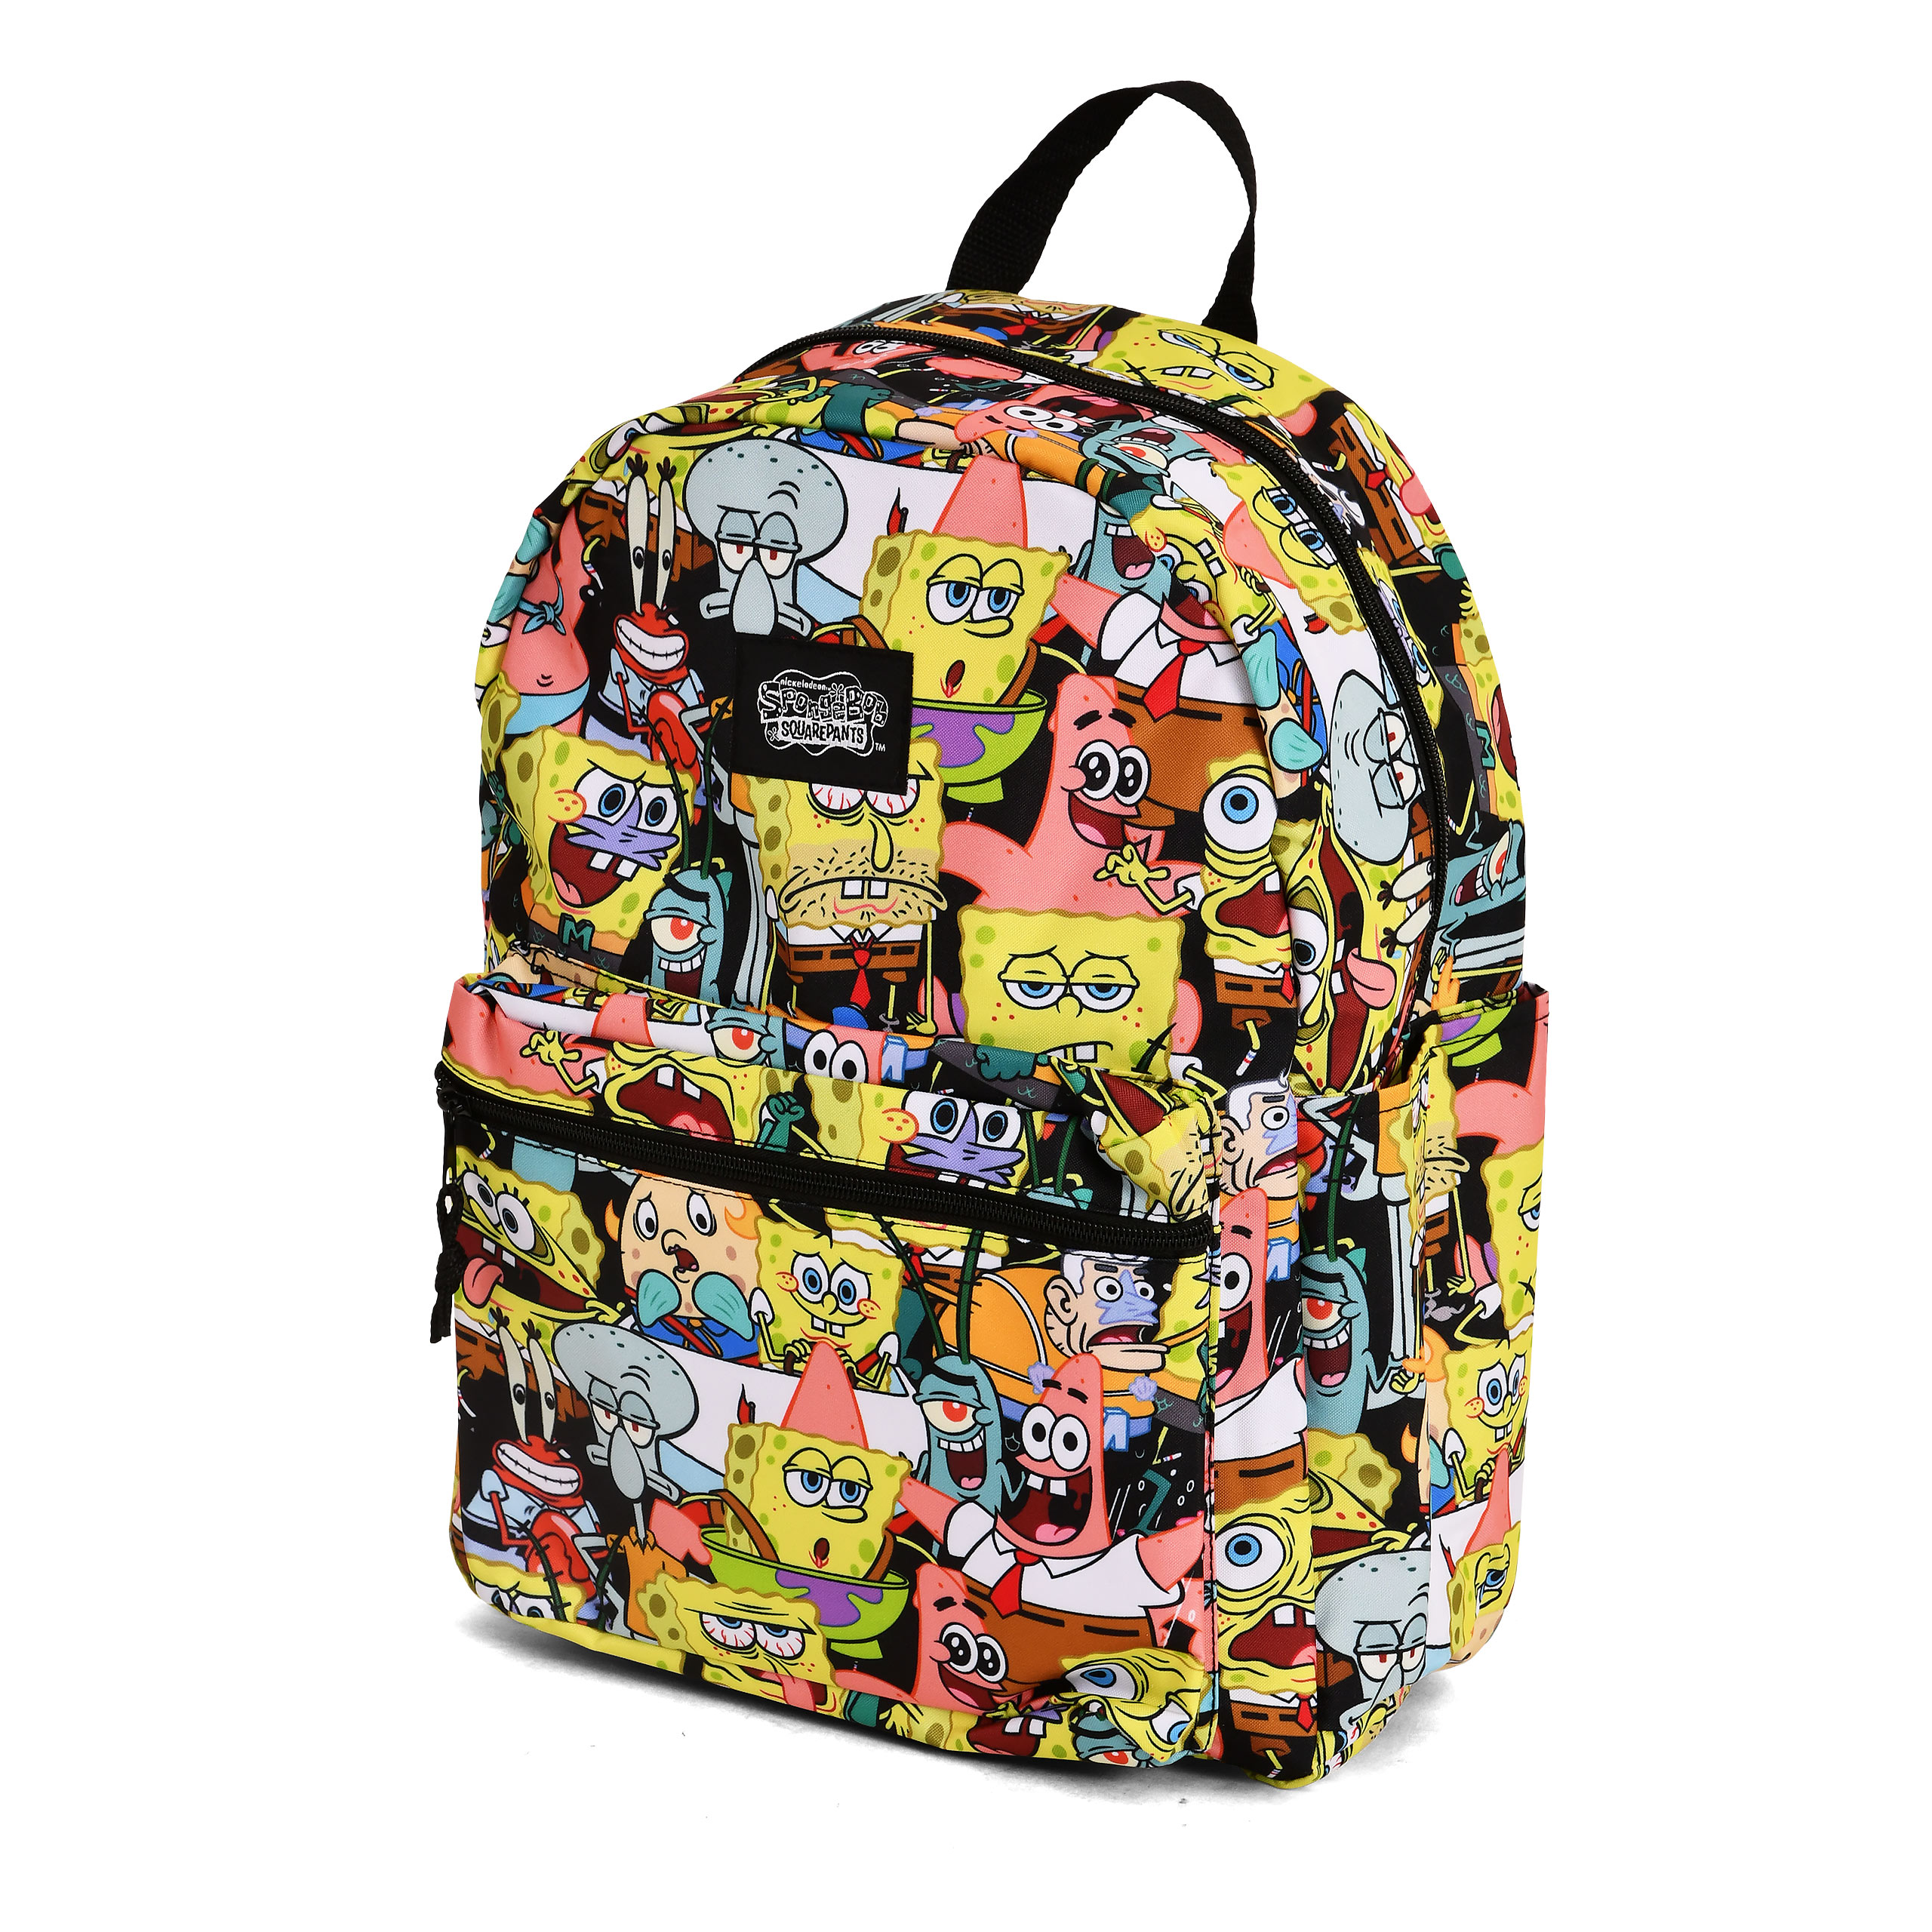 SpongeBob - Characters Backpack